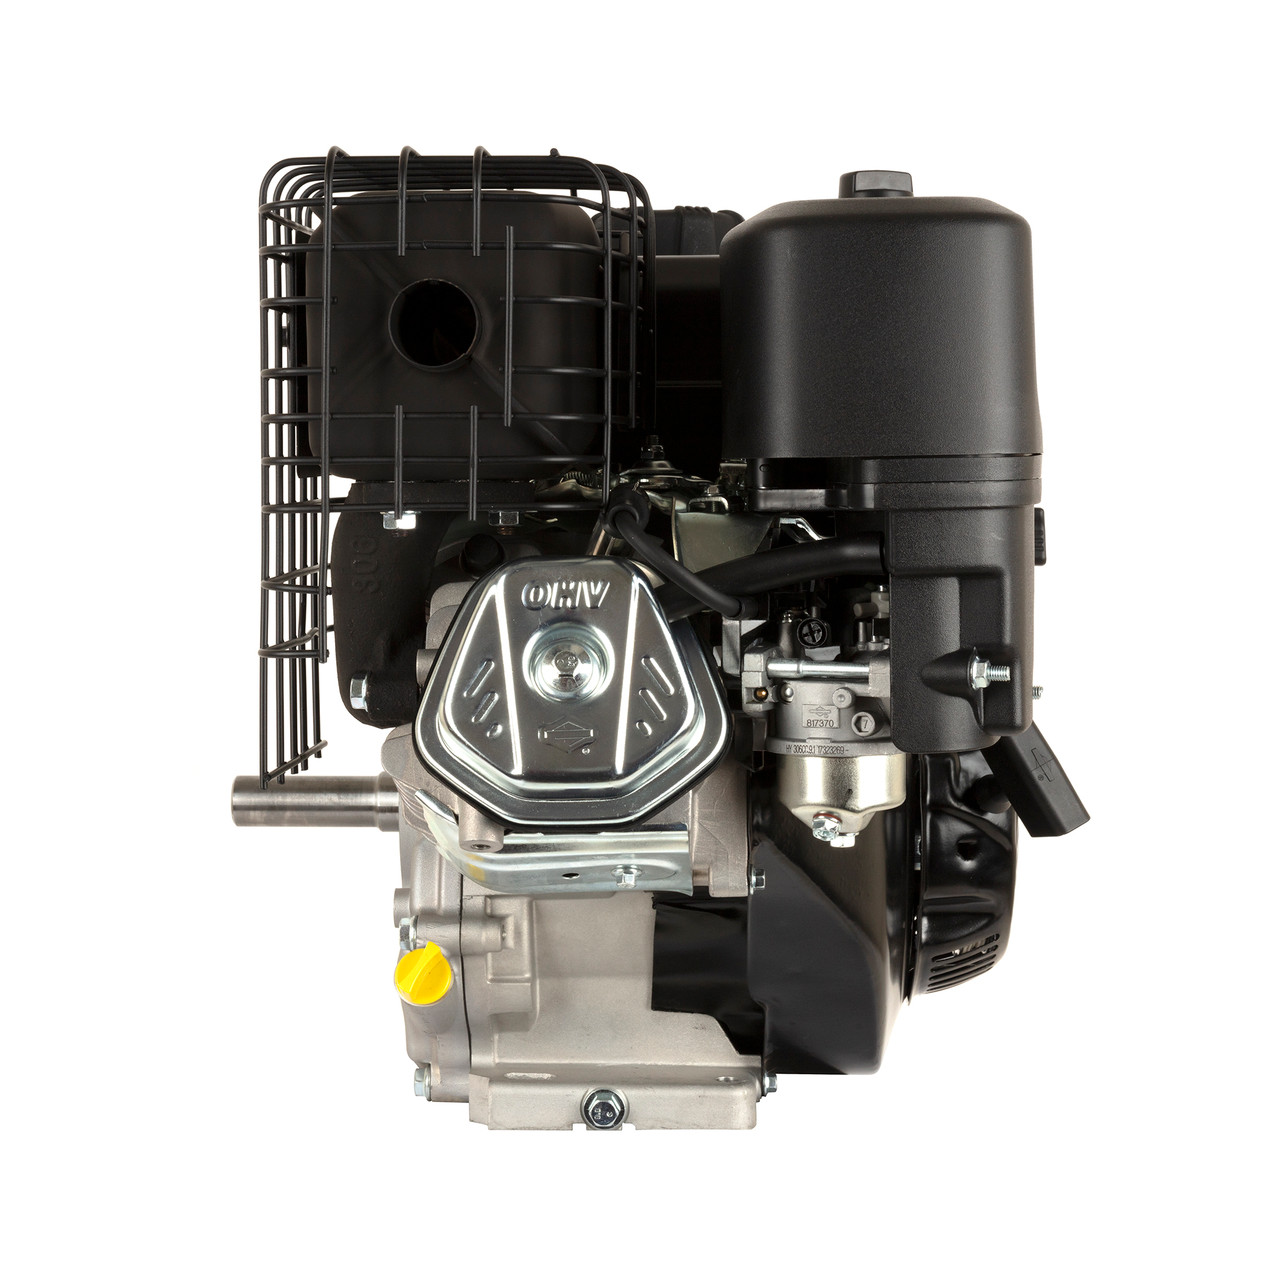 XR Series 10.0 HP 306cc Horizontal Shaft Engine 19N137-0242-F1